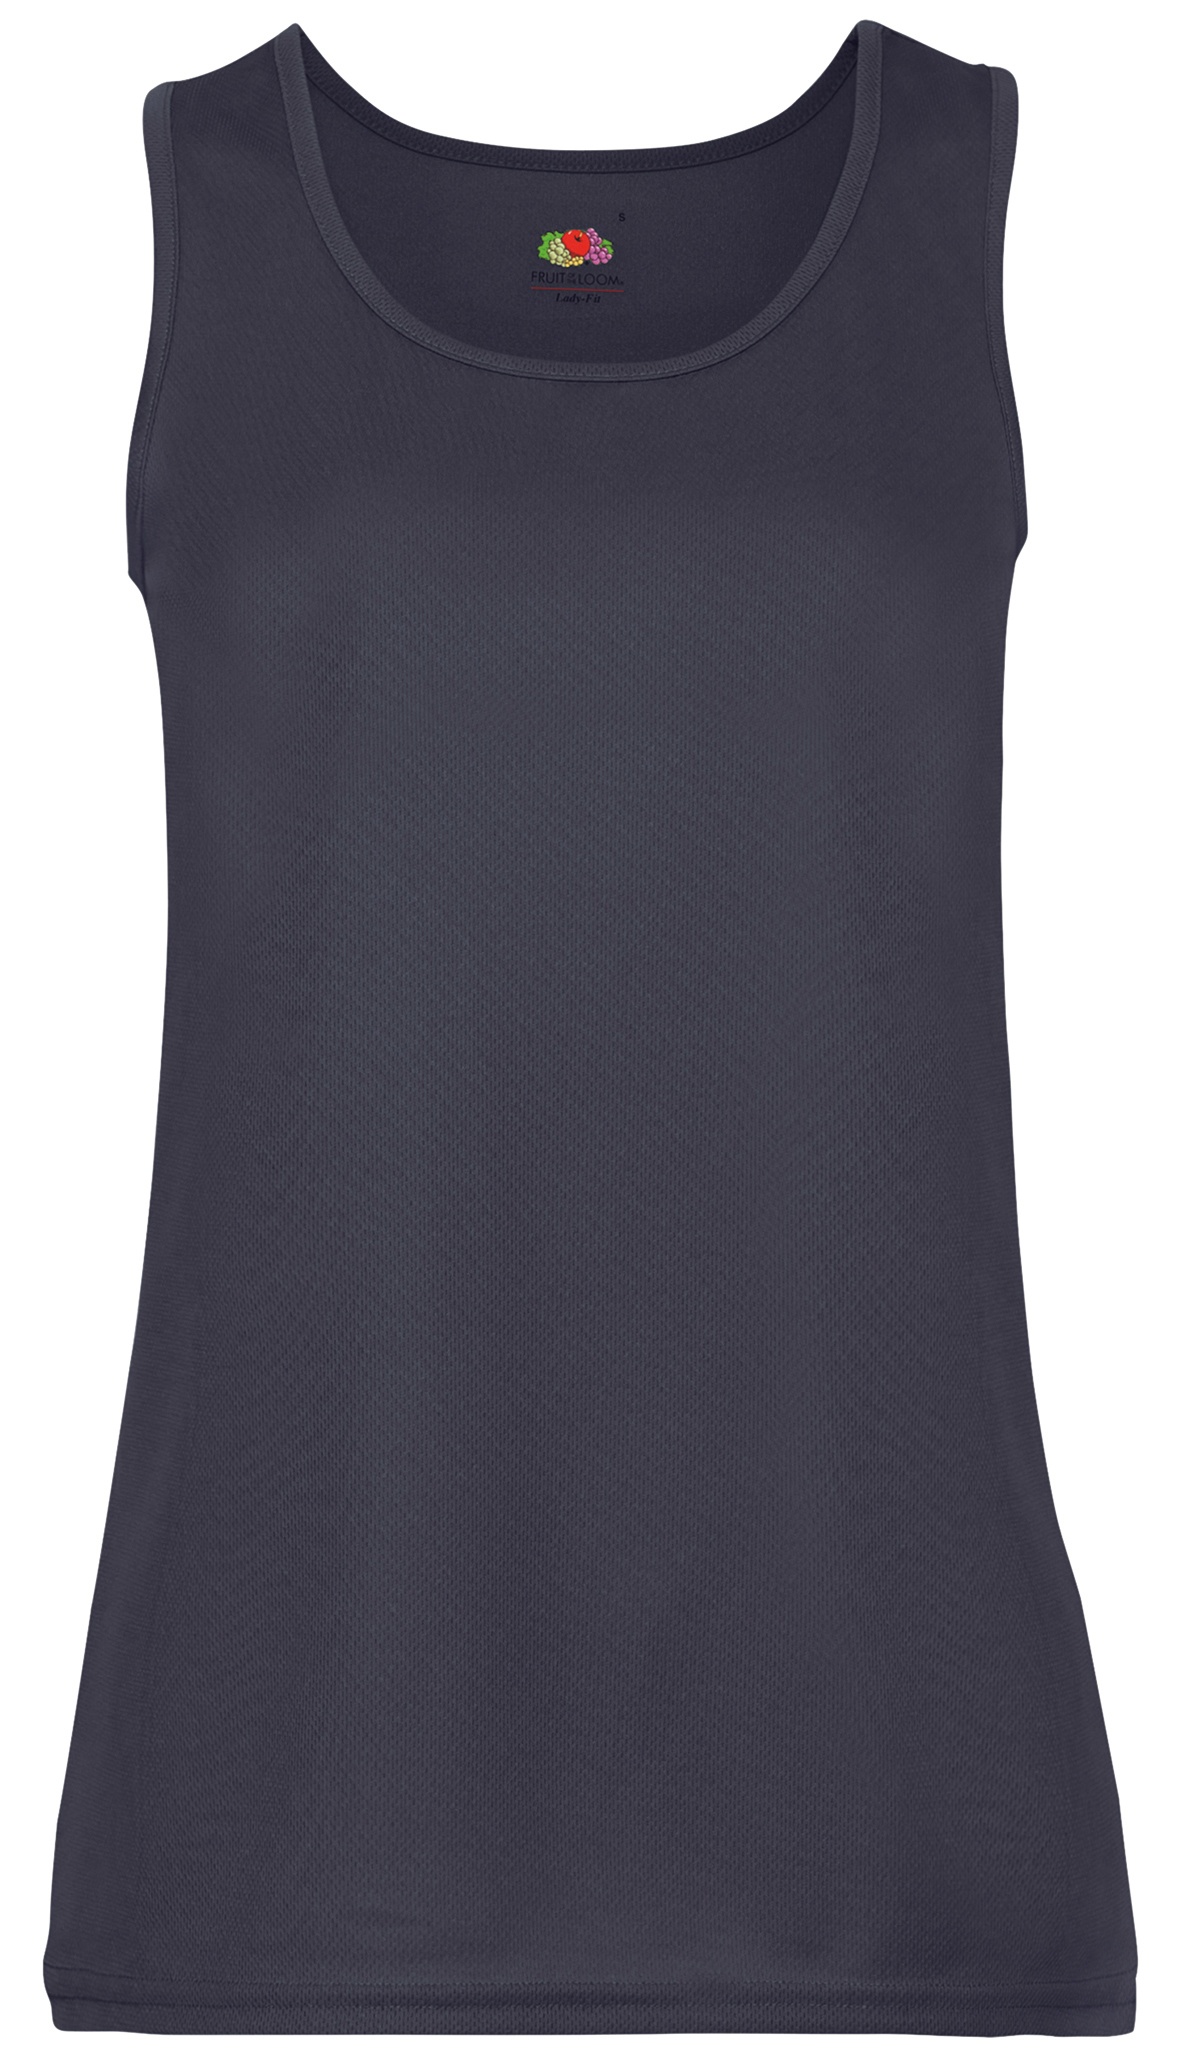 Fruit of the Loom Performance Vest Lady-Fit Damen Tank Top Sport Shirt Fitness NEU, deep navy, 2XL